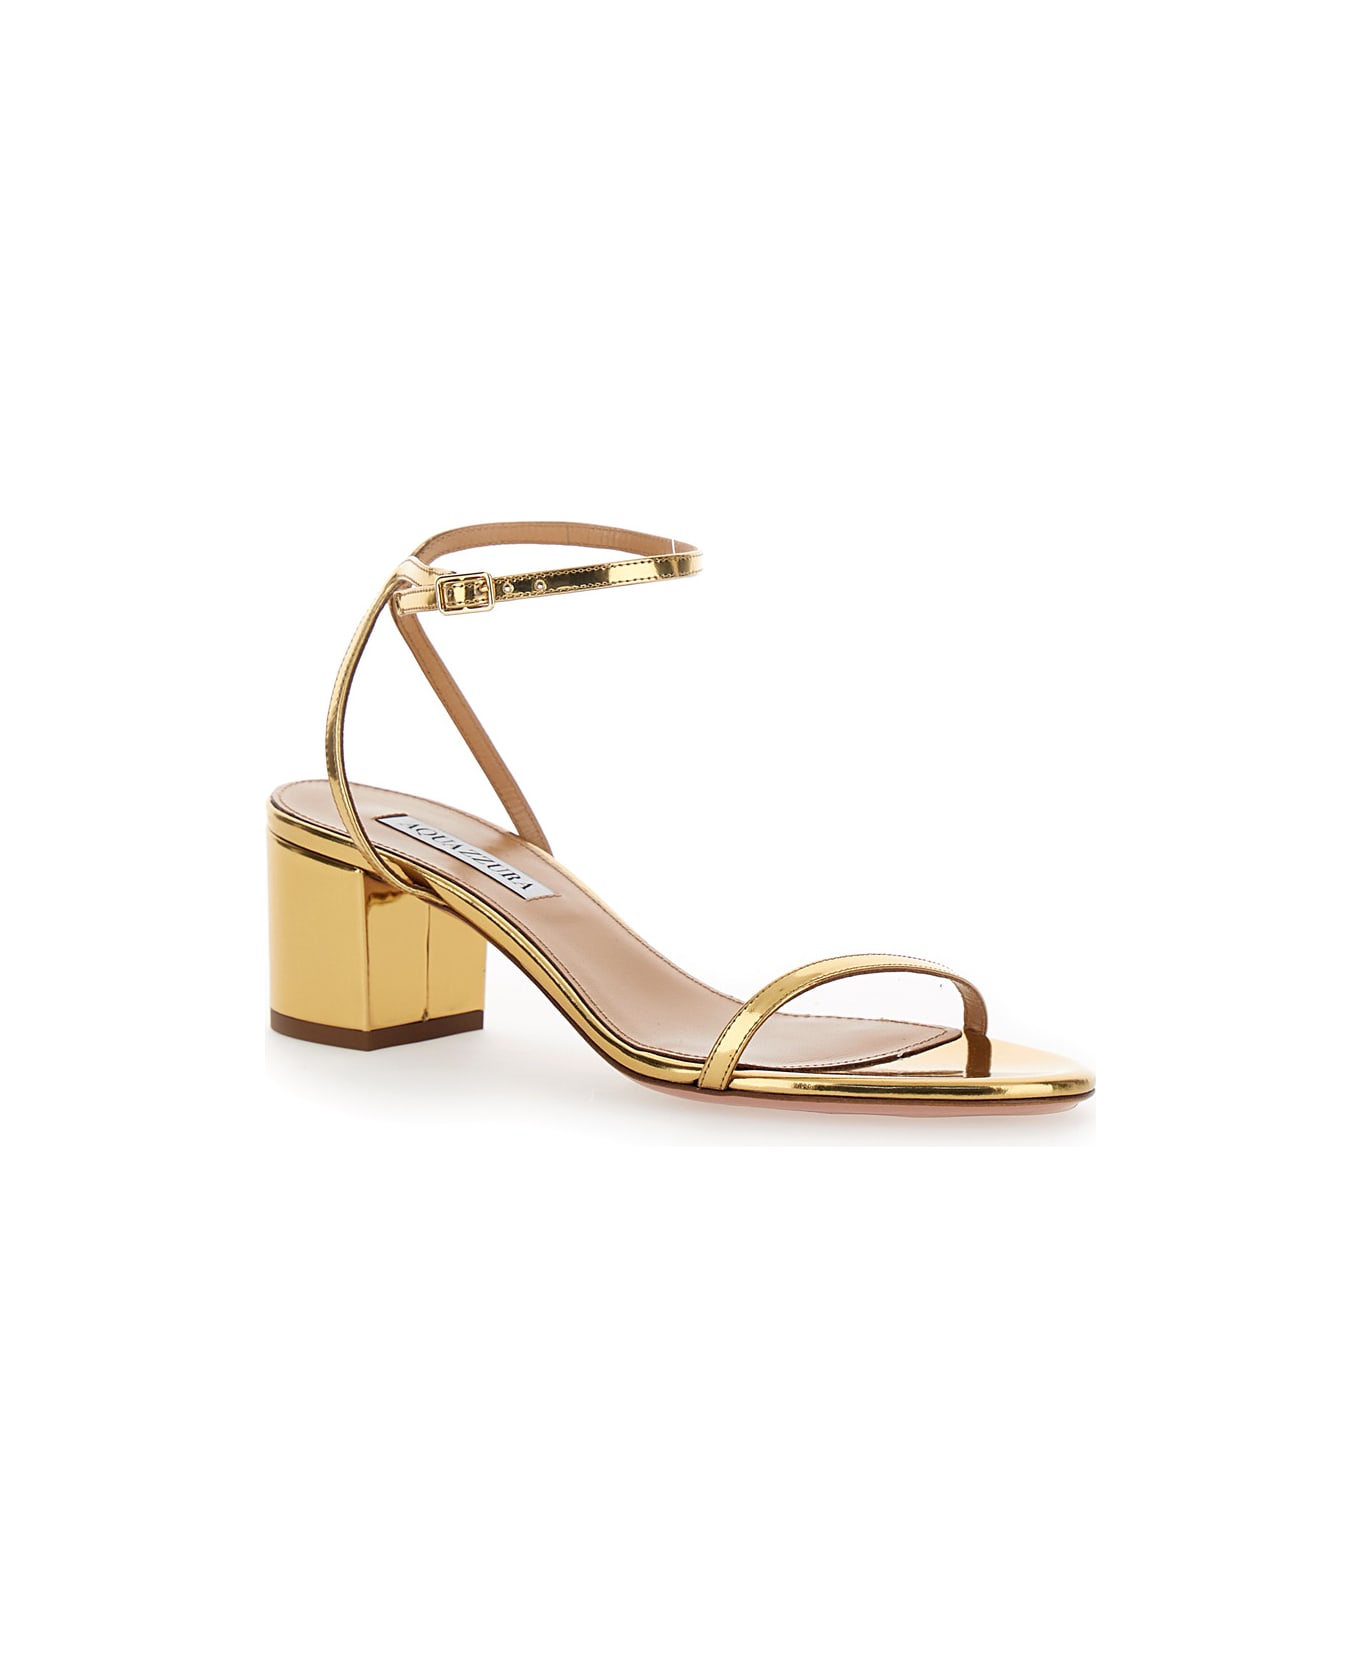 Aquazzura 'olie' Gold Tone Sandals With Block Heel In Laminated Leather Woman - Metallic サンダル